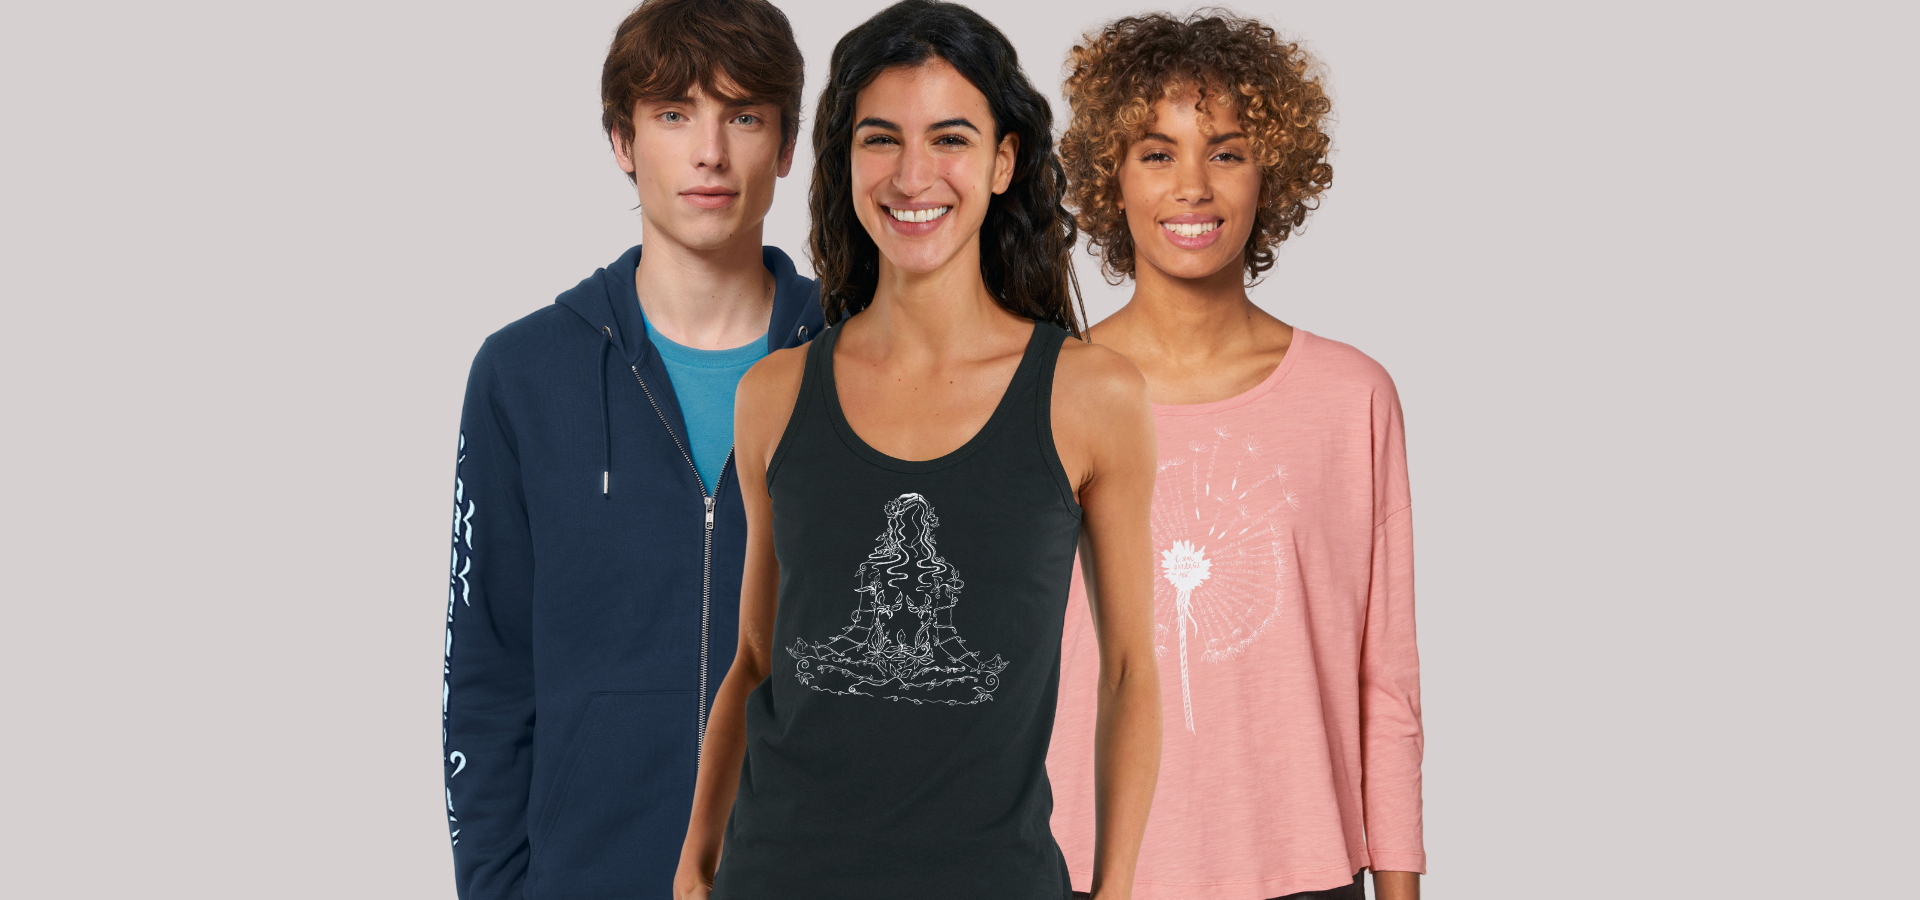 Earthmonk spiritual, organic and ethical t-shirts and tops